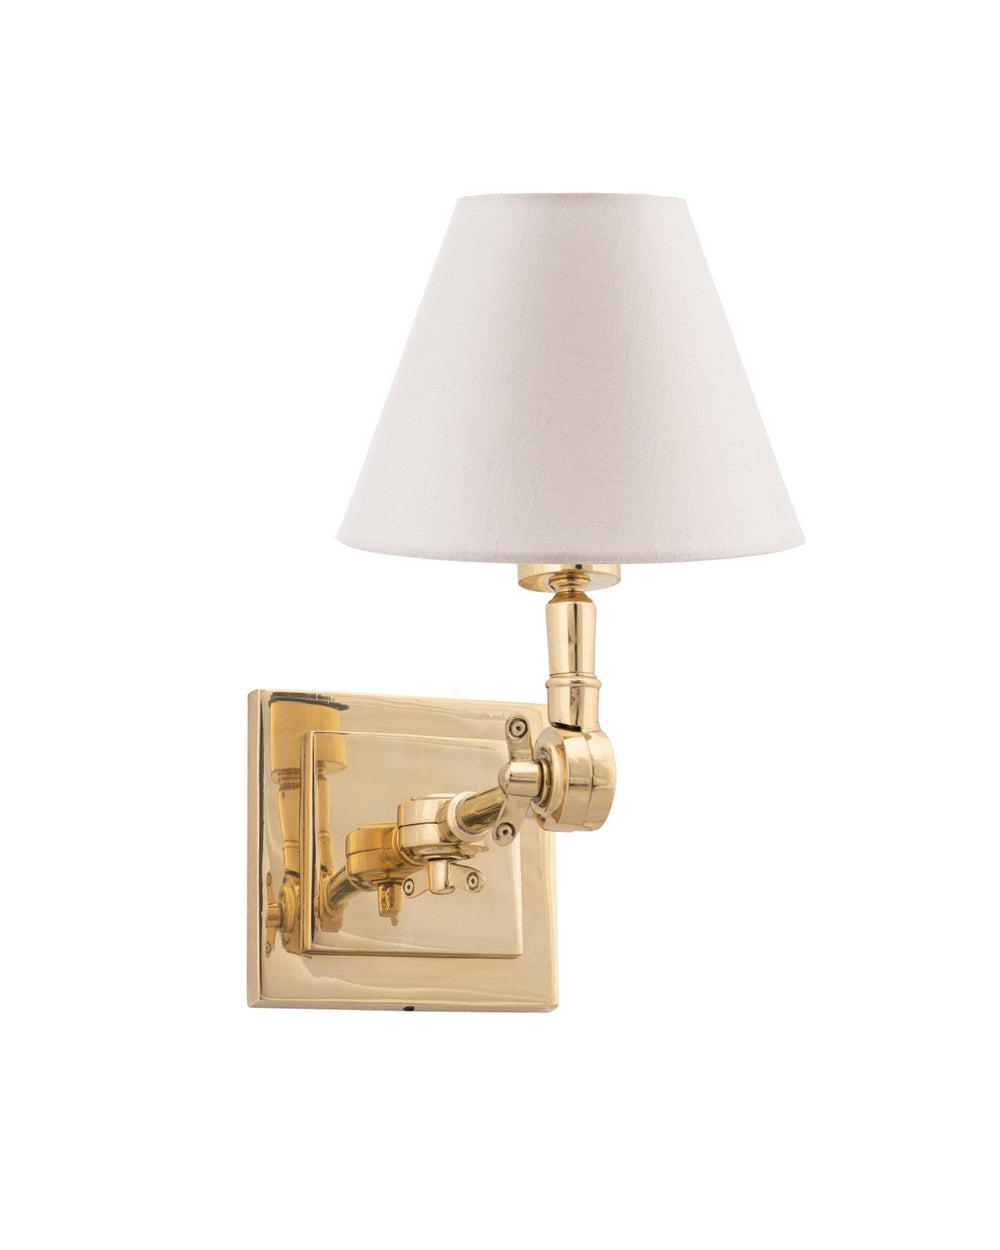 mind-the-gap-joyce-wall-sconce-polished-brass-finish-adjustable-wall-lamp